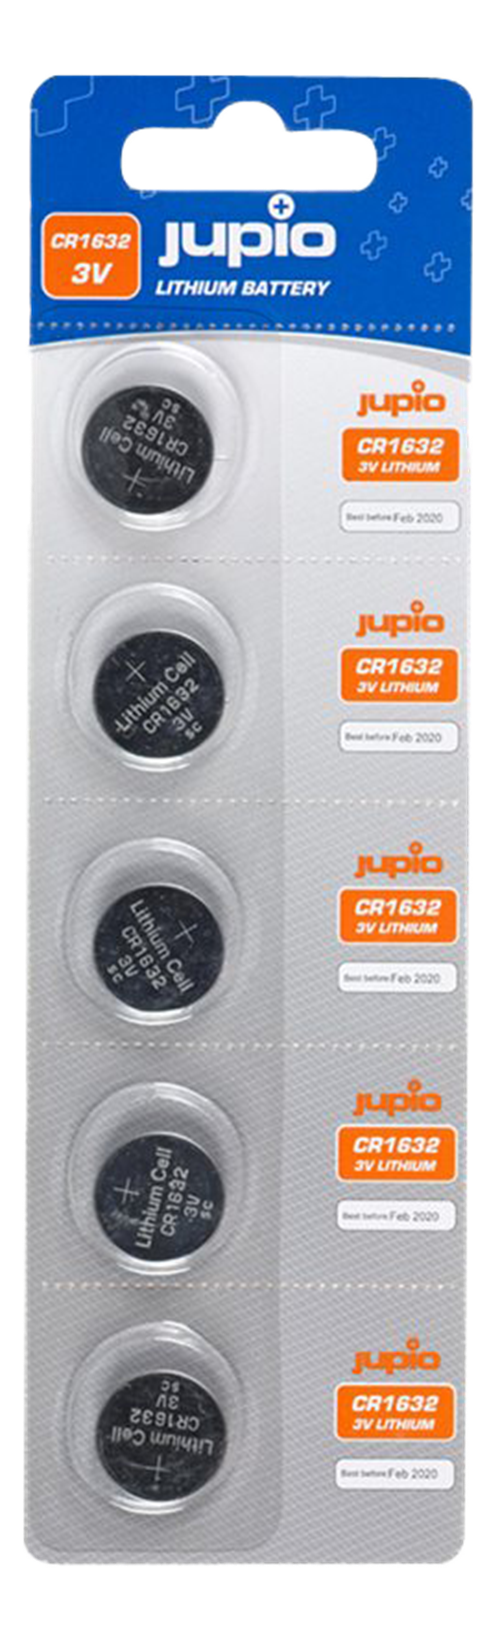 Jupio CR1632 batteri, 5 stk